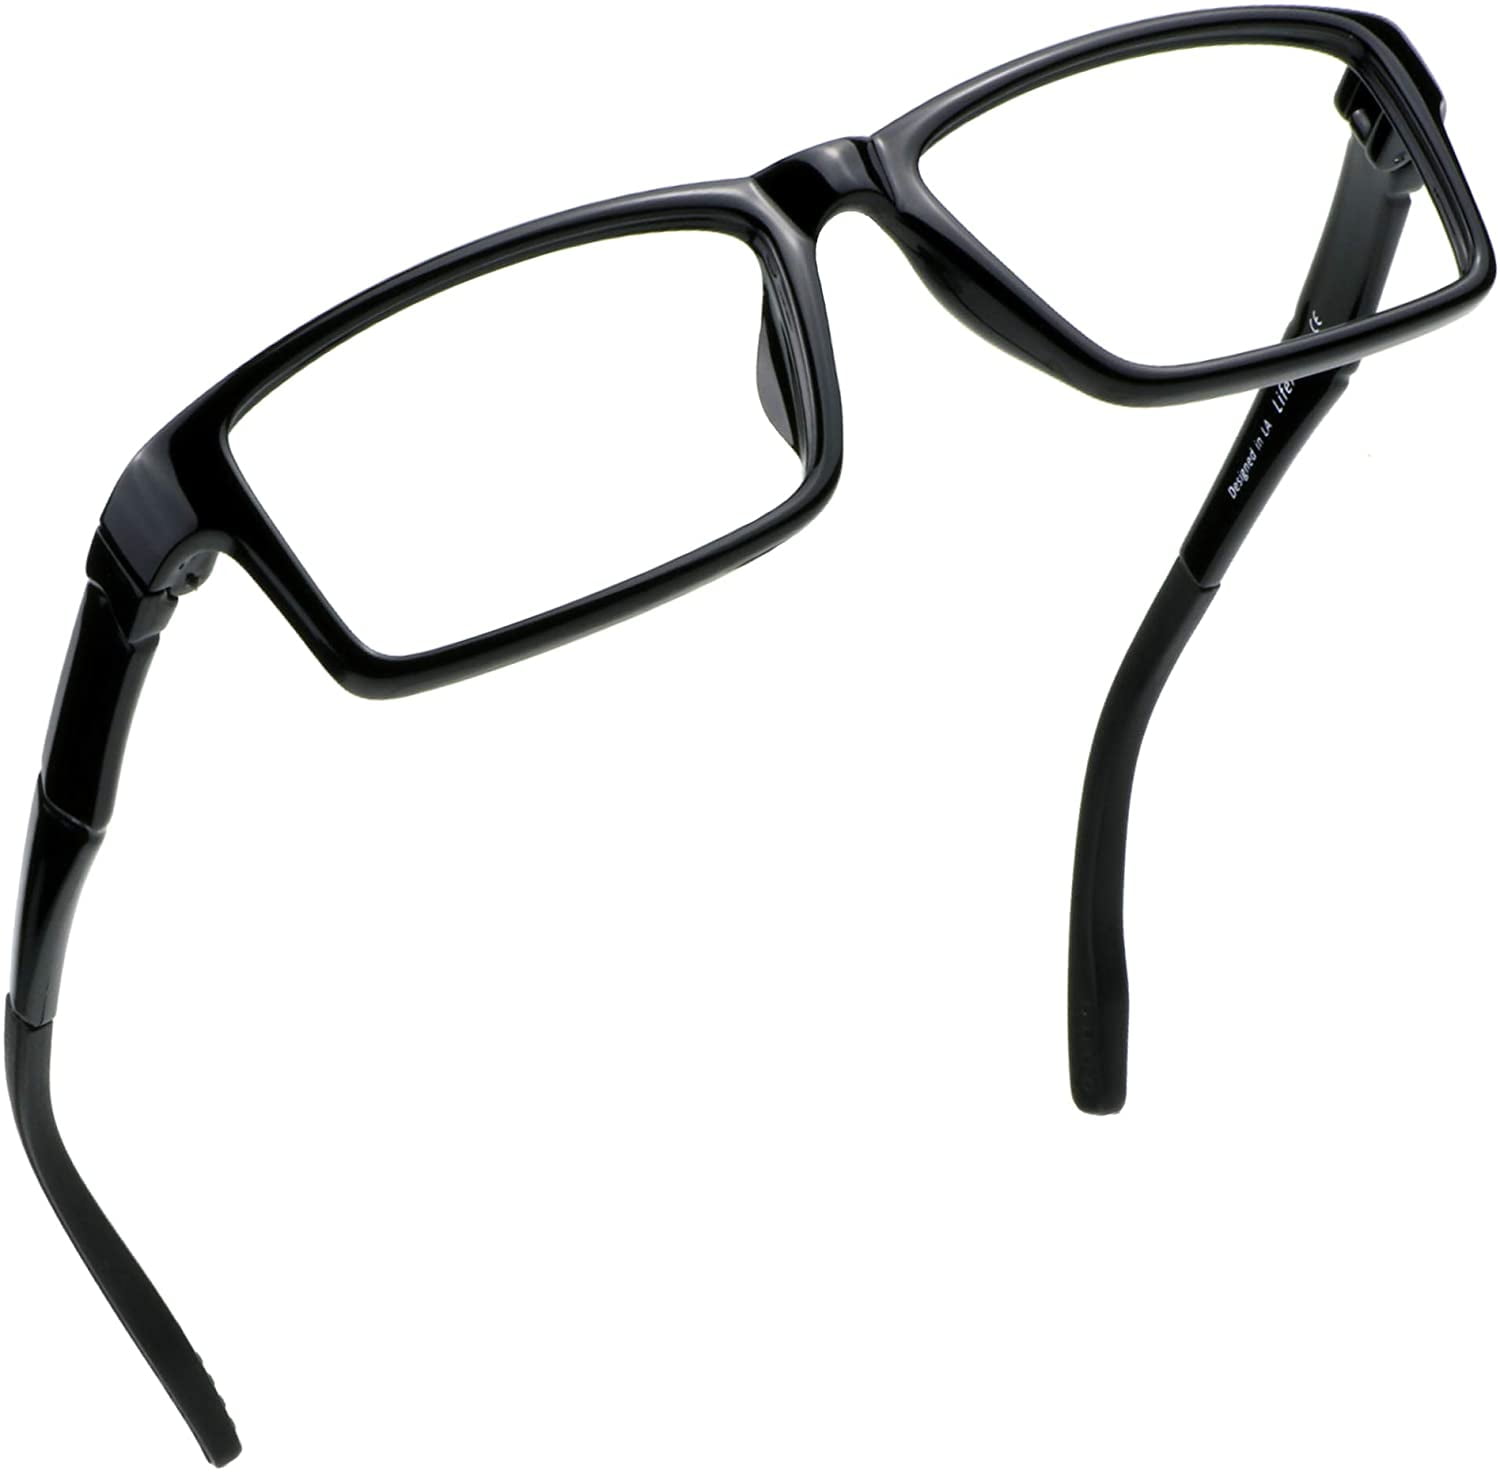 Computer/Game/Reading/TV Blue Light Blocking Glasses 2 Pack Blue Light Glasses Fashion Round Half Frame 